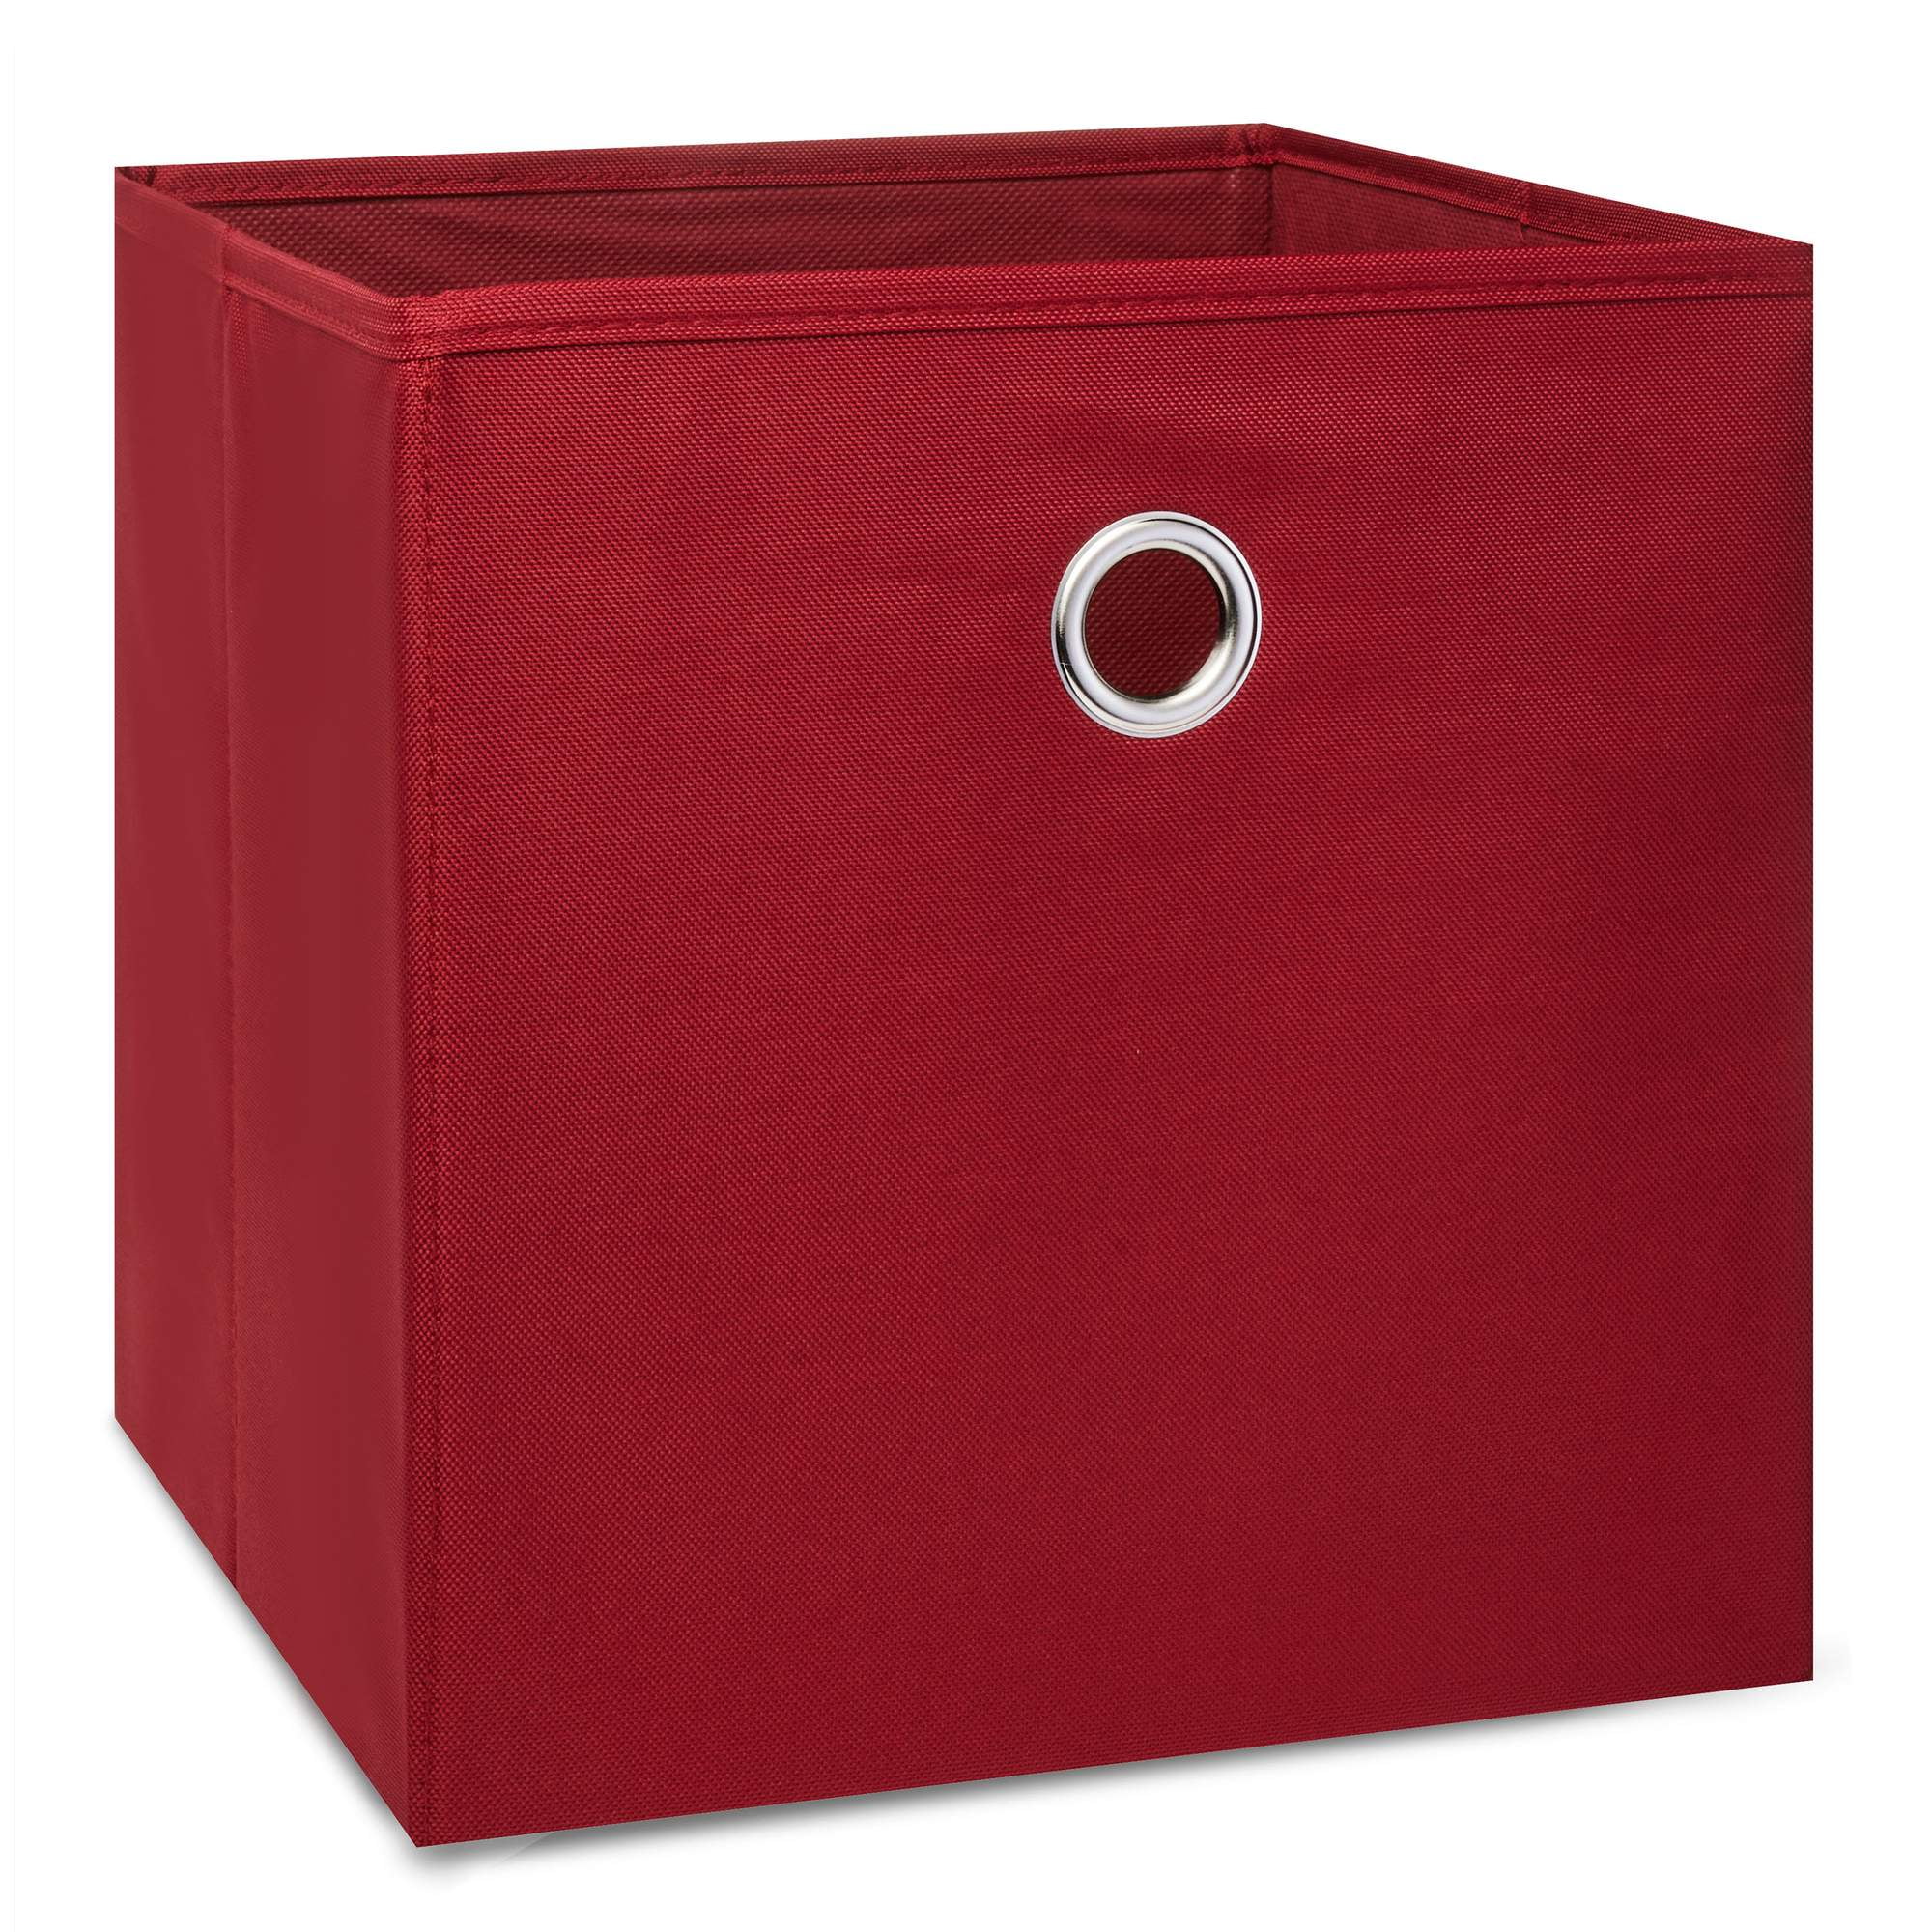 Cute Cube Storage Bins Large Cotton Linen Fabric Folding Storage Box  Foldable Bins For Kids Toys Organizer With Lids Storage Basket Laundry  Basket 230413 From Gou09, $8.9